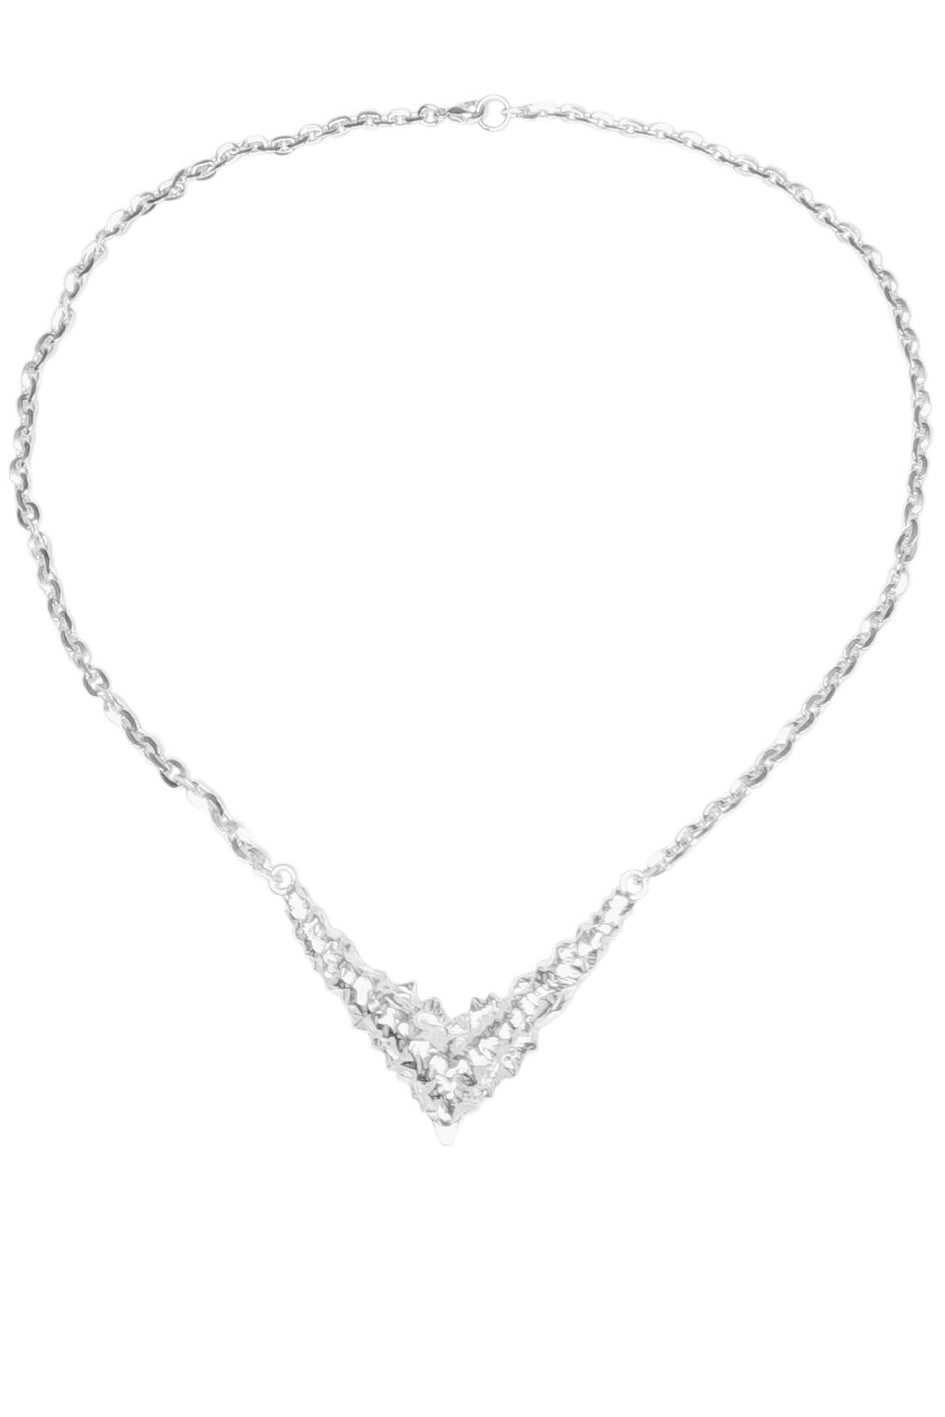 Vanadis necklace in silver by Annika Burman